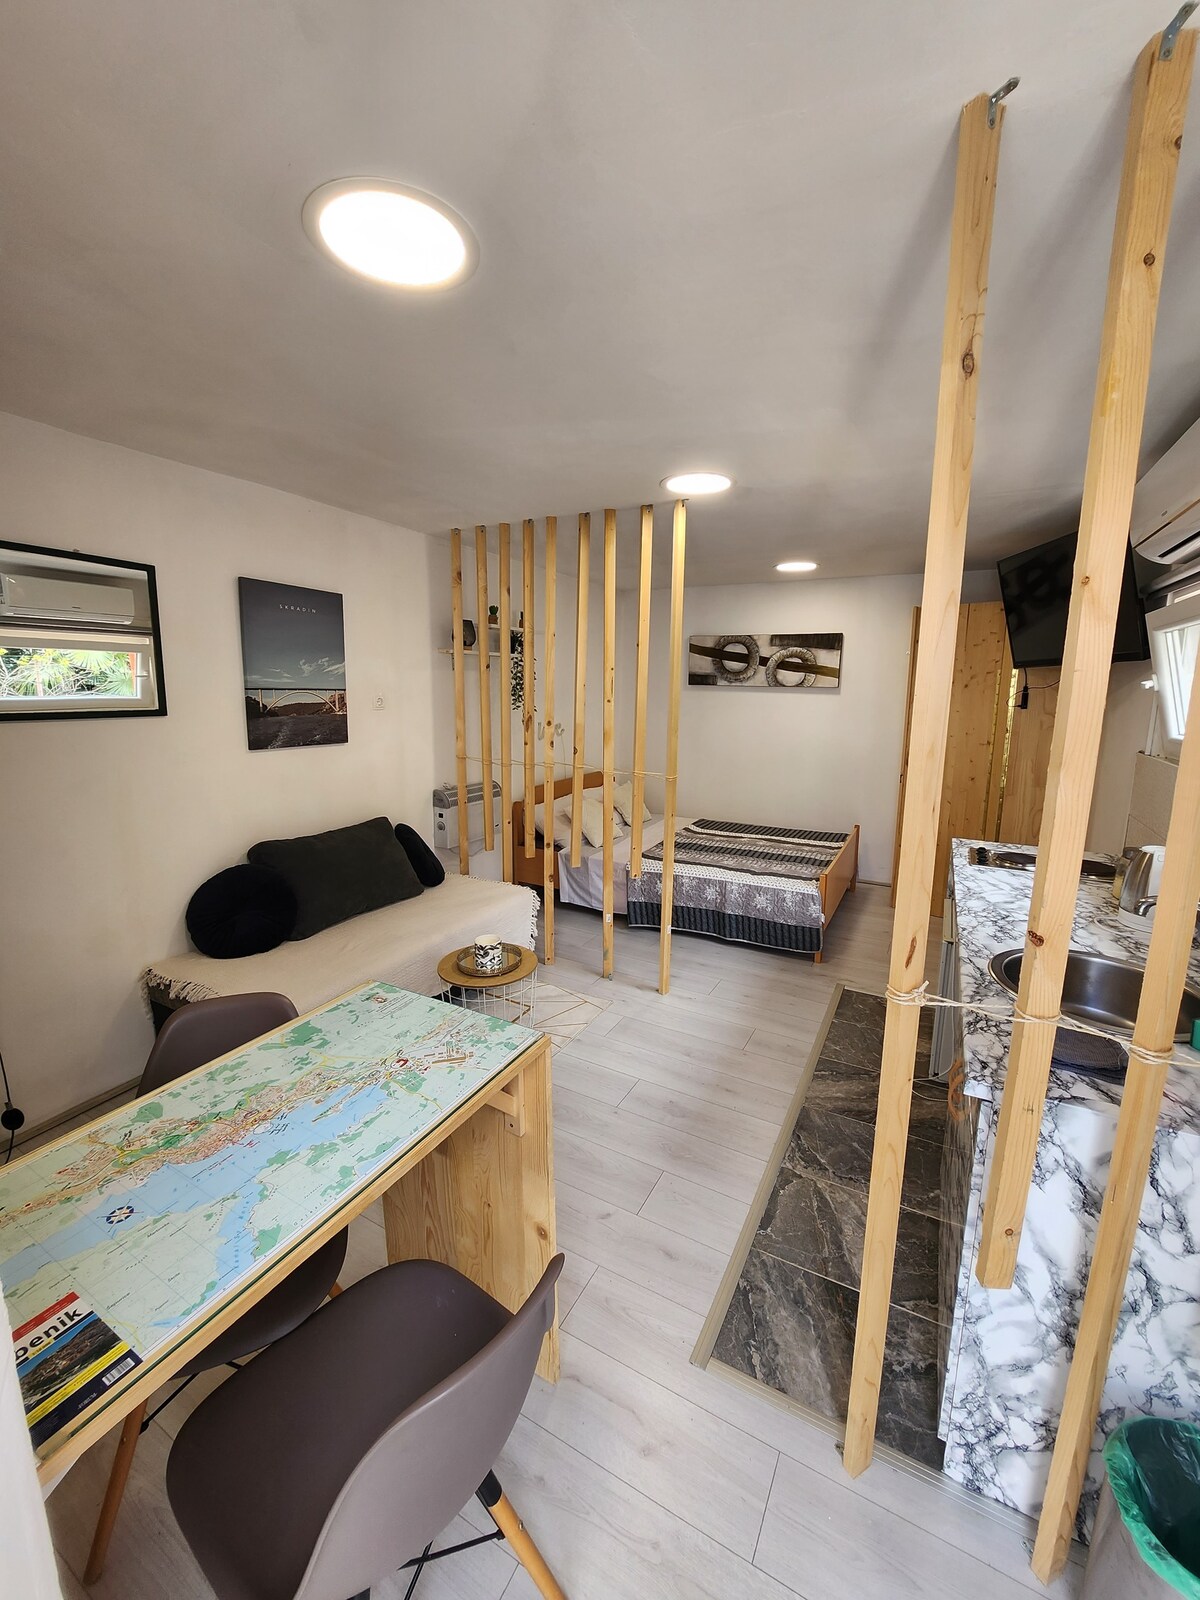 Sleep&Travel - Small cozy apartment & Free parking